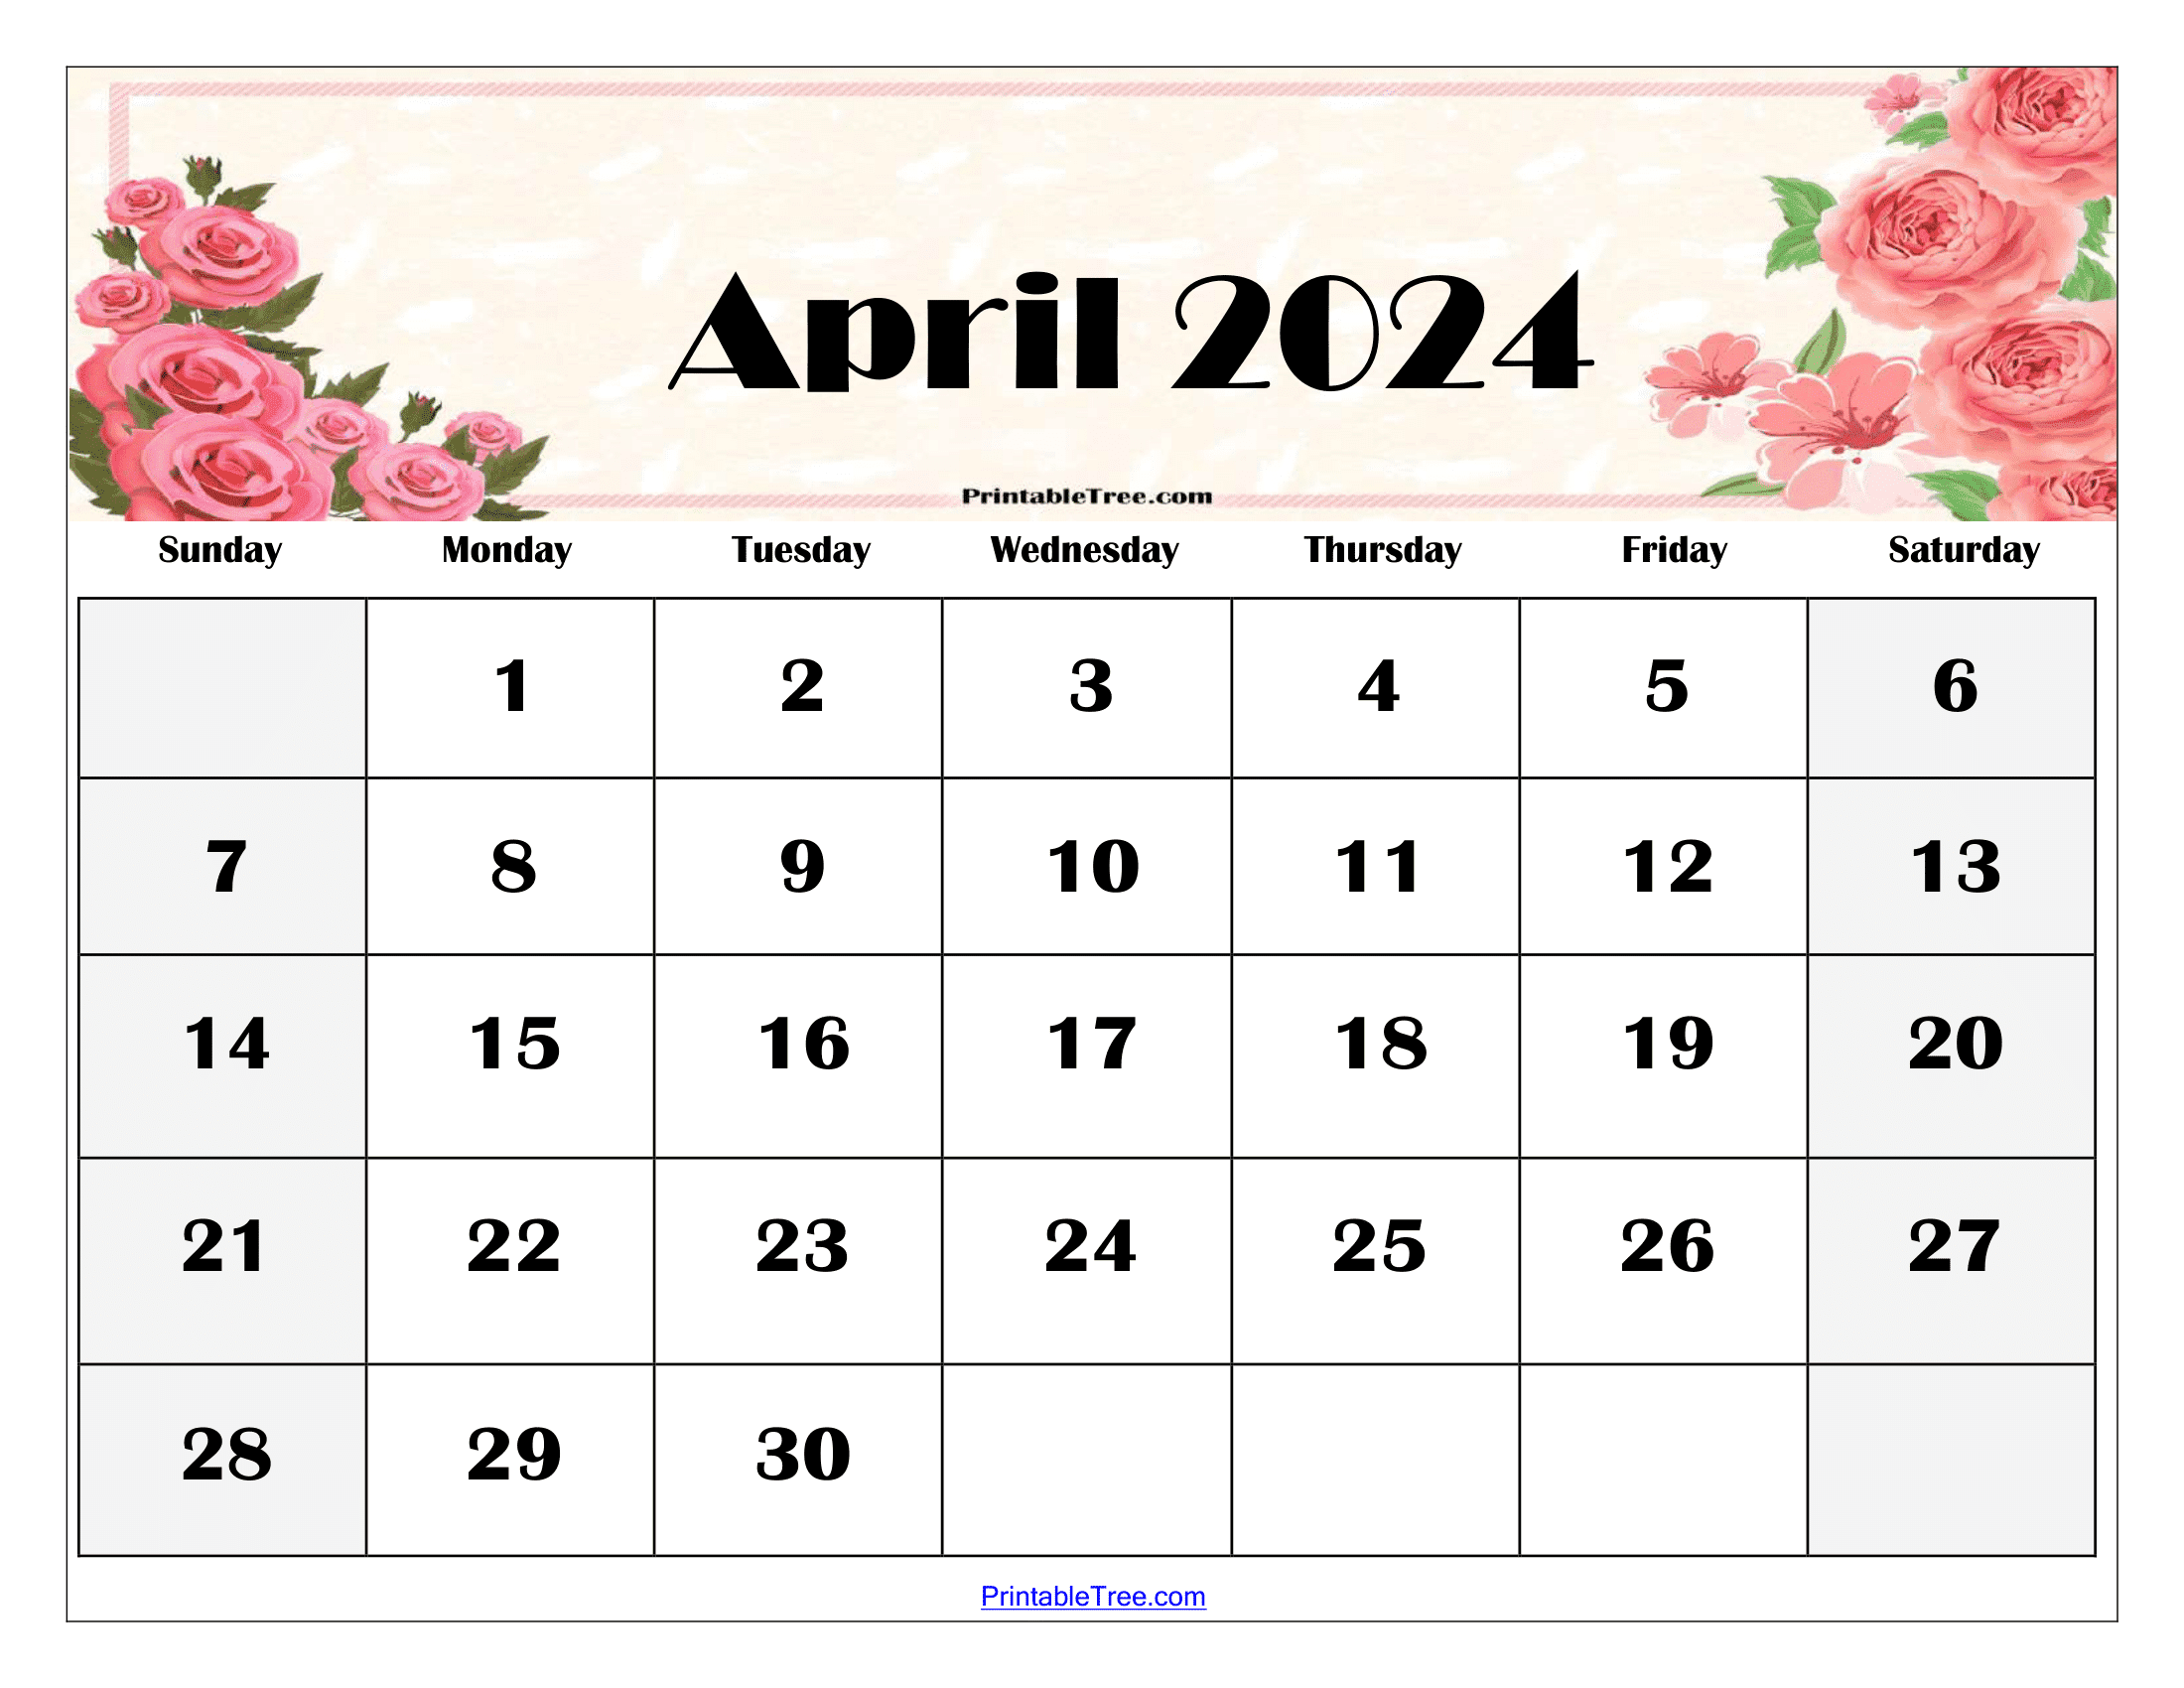 April 2024 Calendar Printable April Blank Calendar 2024 Easy To Use - Free Printable 2024 Calendar April